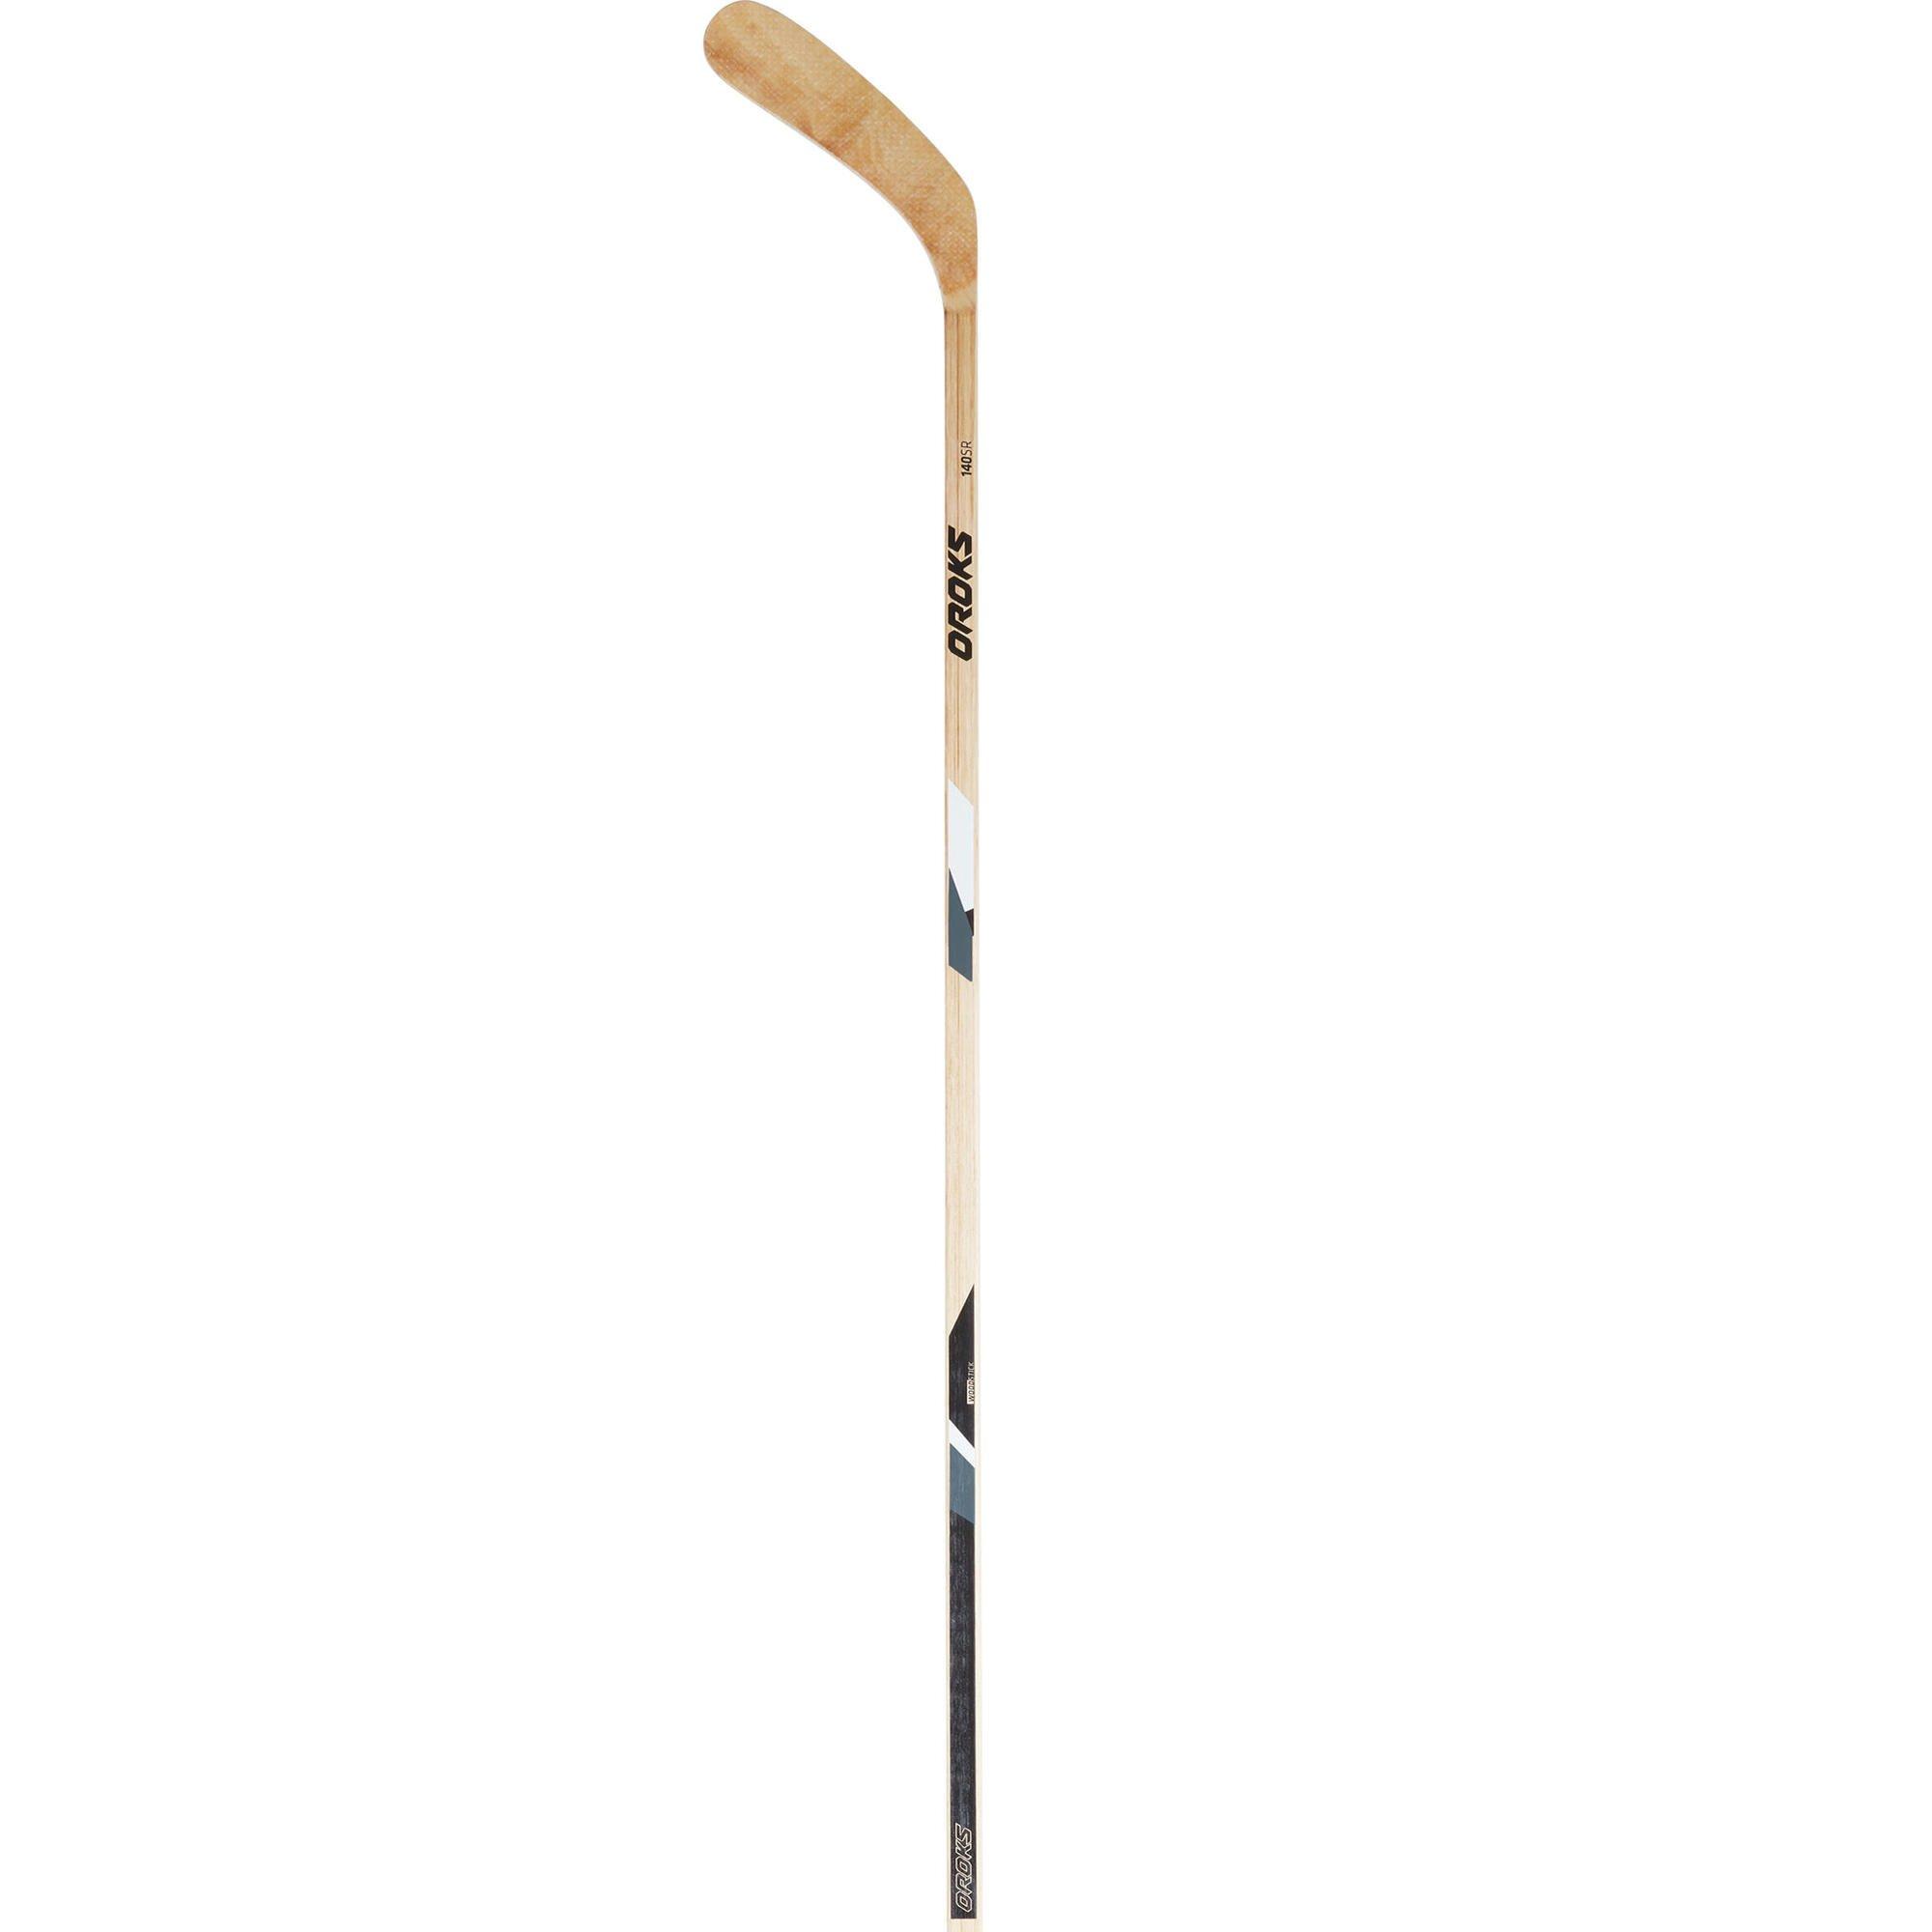 Decathlon Ih 140 Hockey Stick